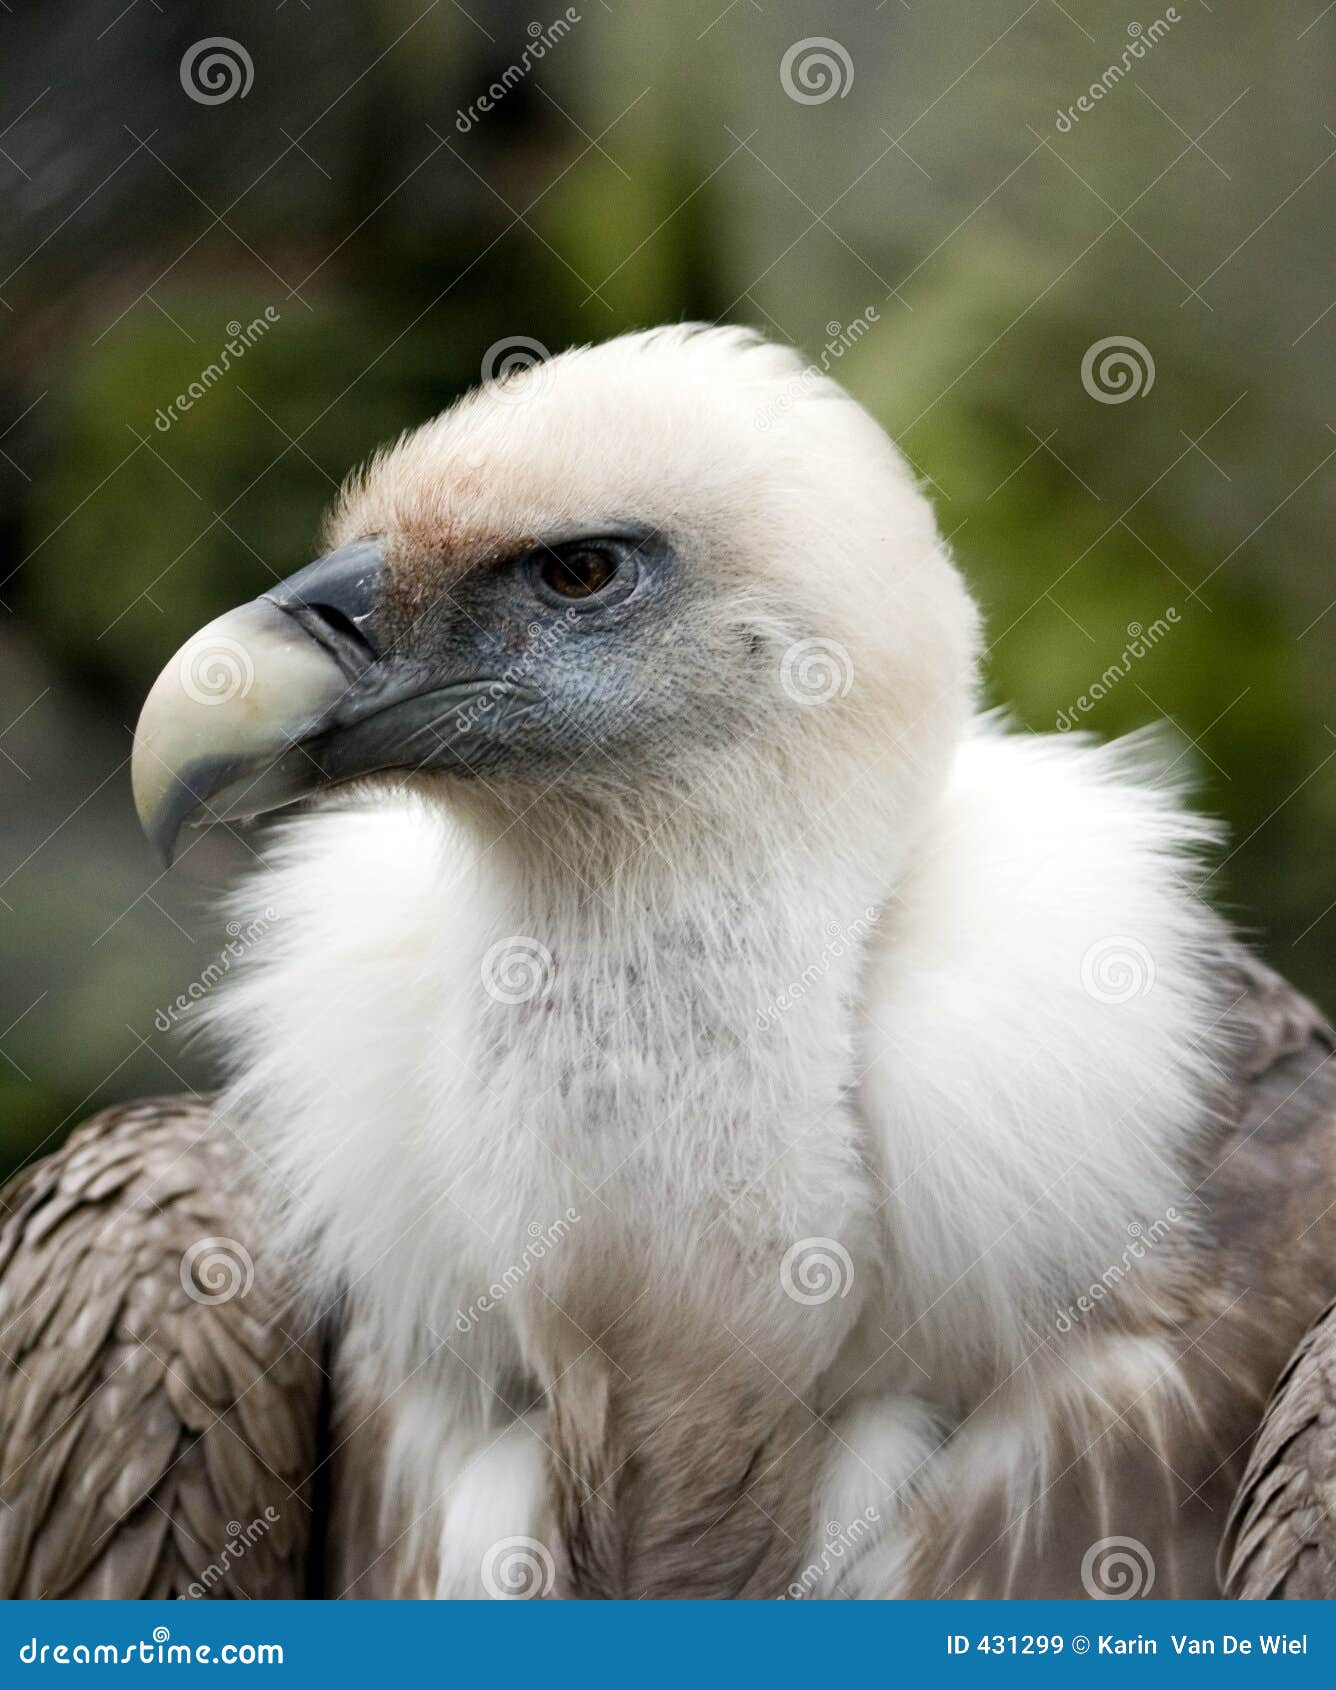 Bad vulture stock image. Image of head, animal, evil, flying - 431299